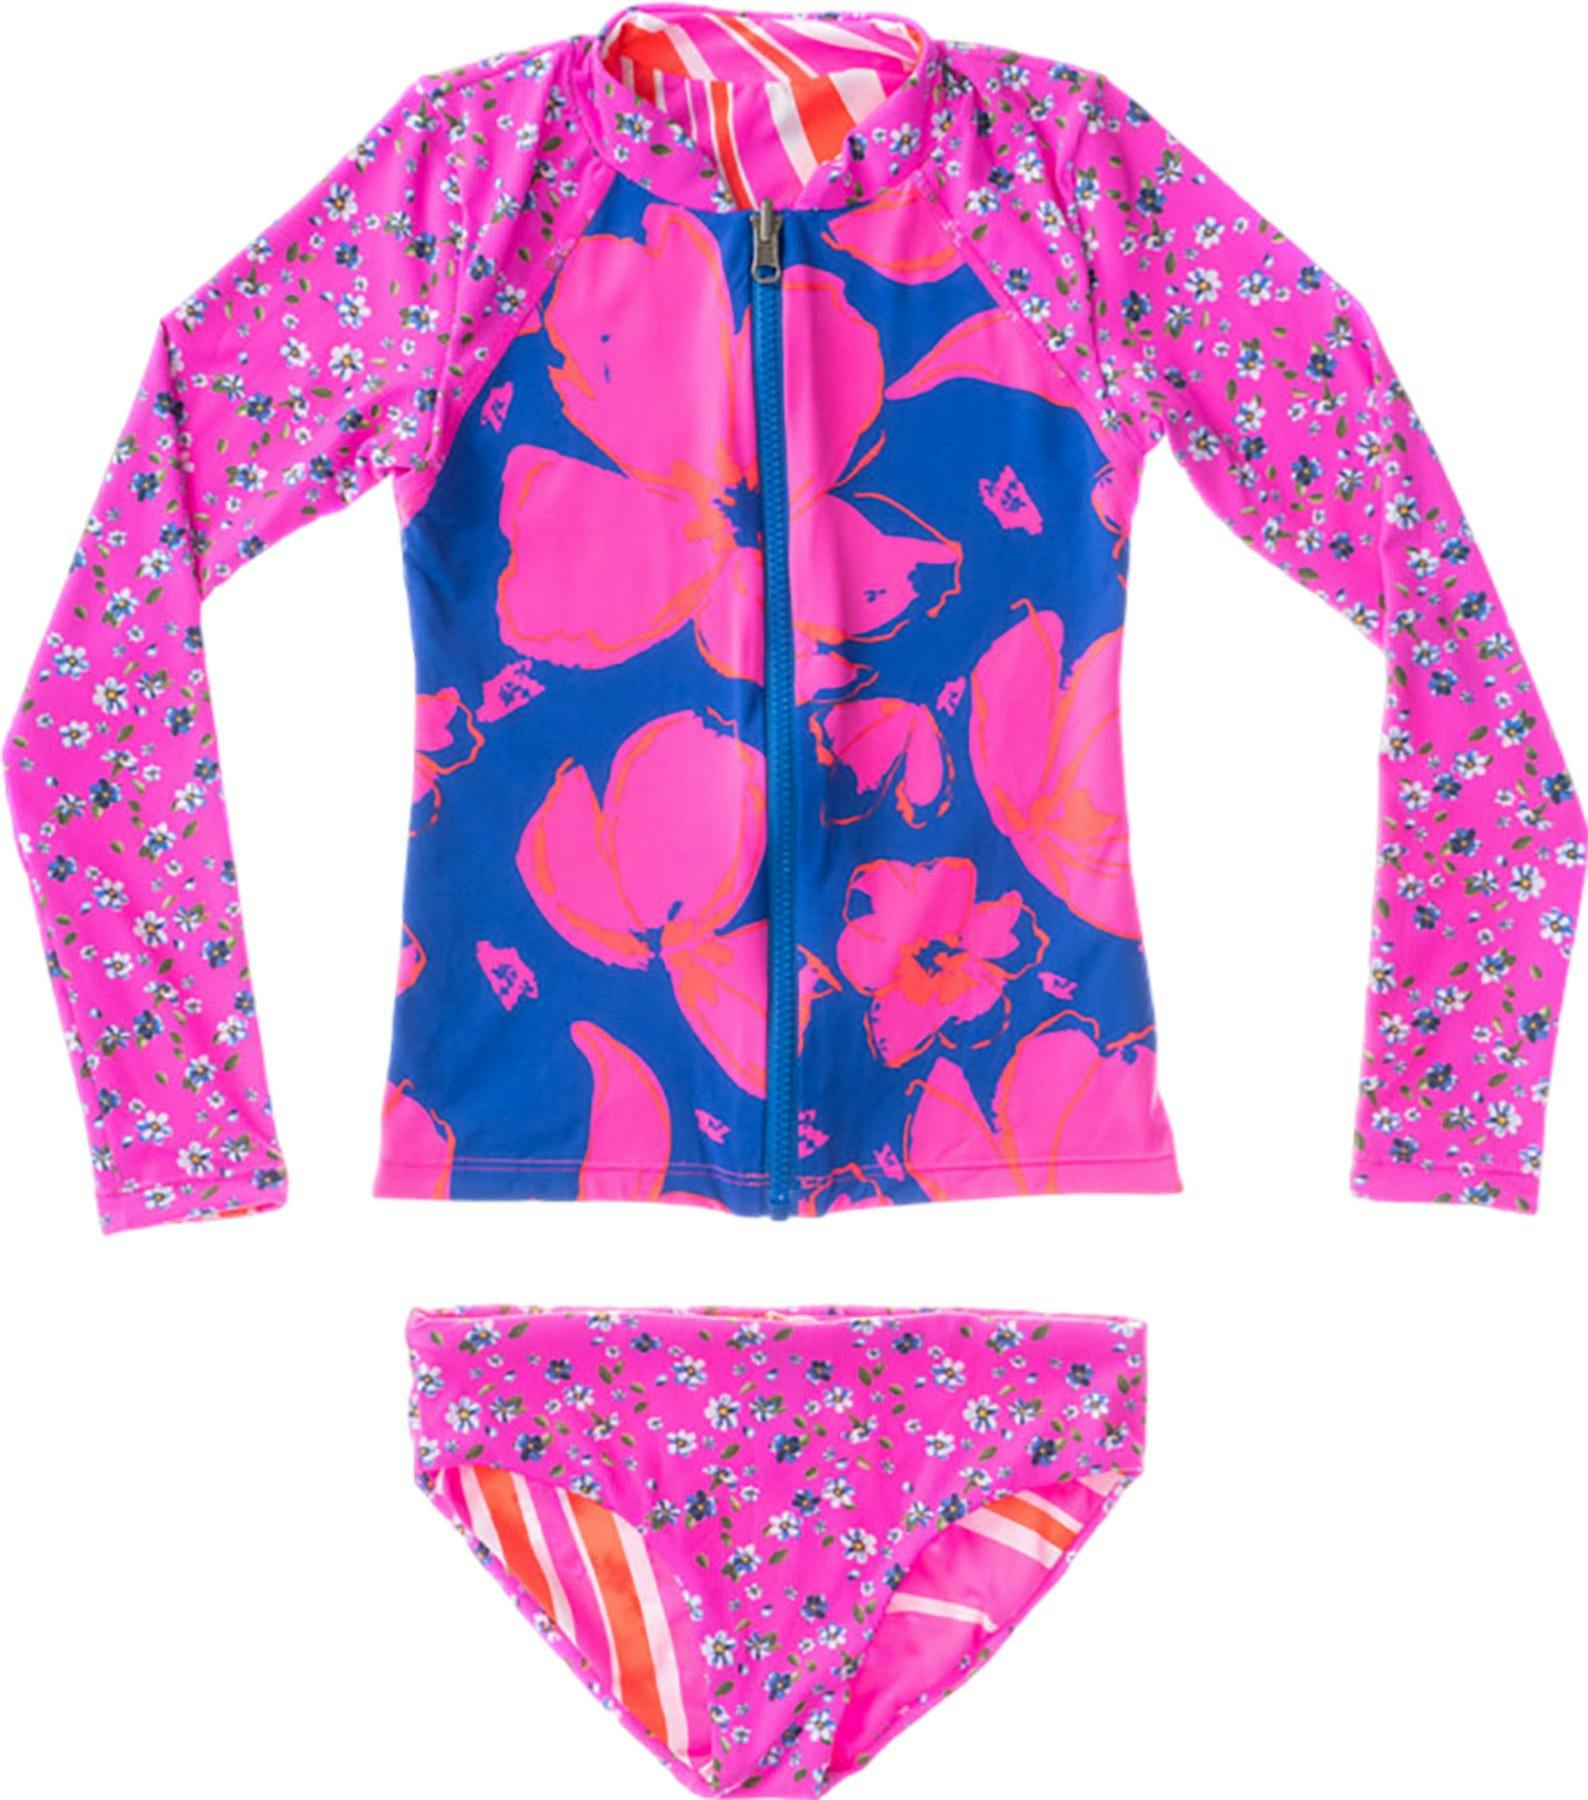 Product image for Cherish Happyflower Rashguard Bikini Set - Girls